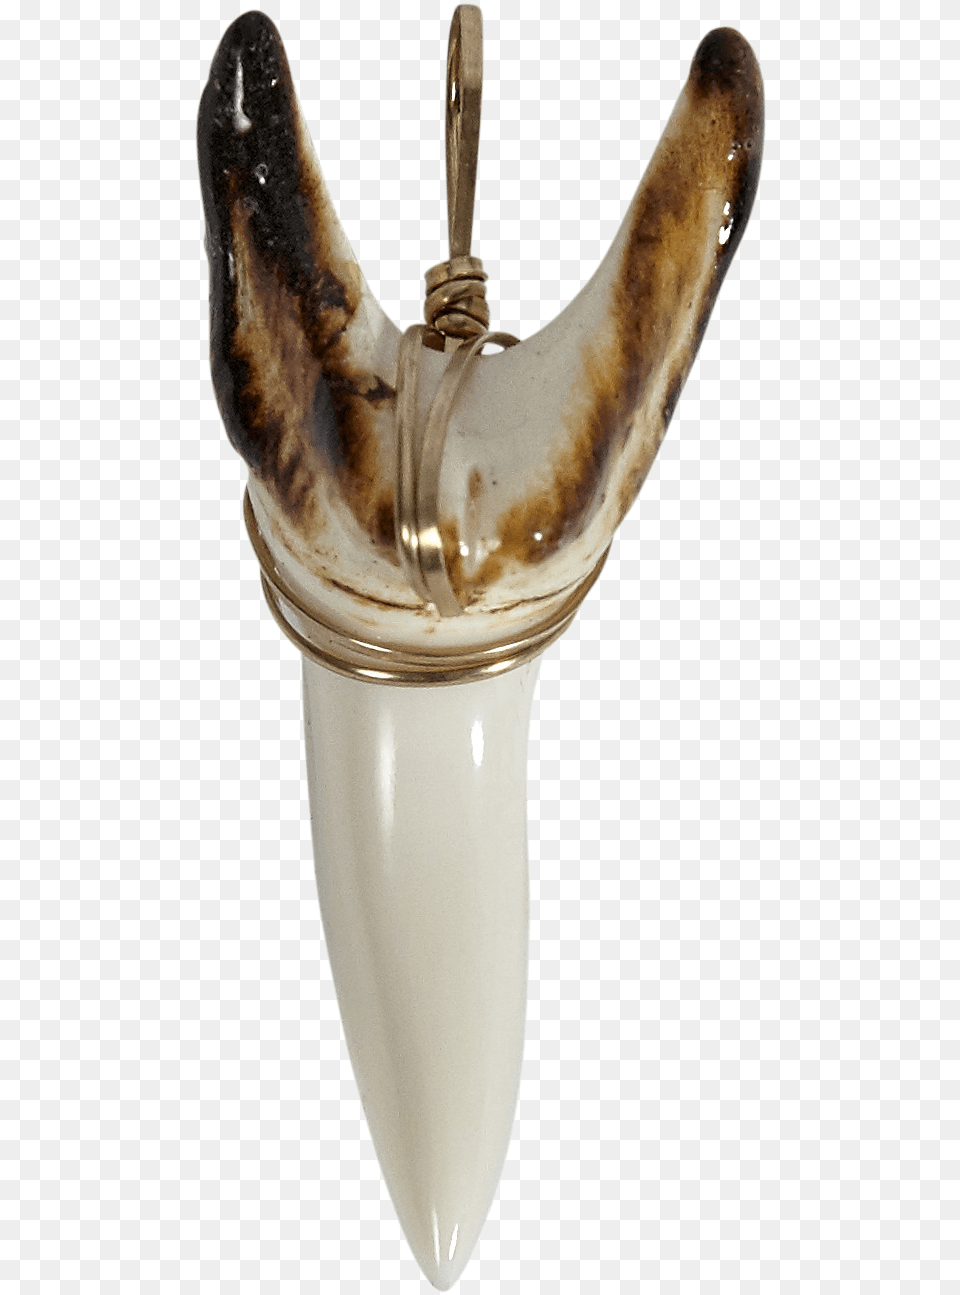 Shark Teeth Burnt Gold Wired Deer, Accessories, Gemstone, Jewelry, Blade Png Image